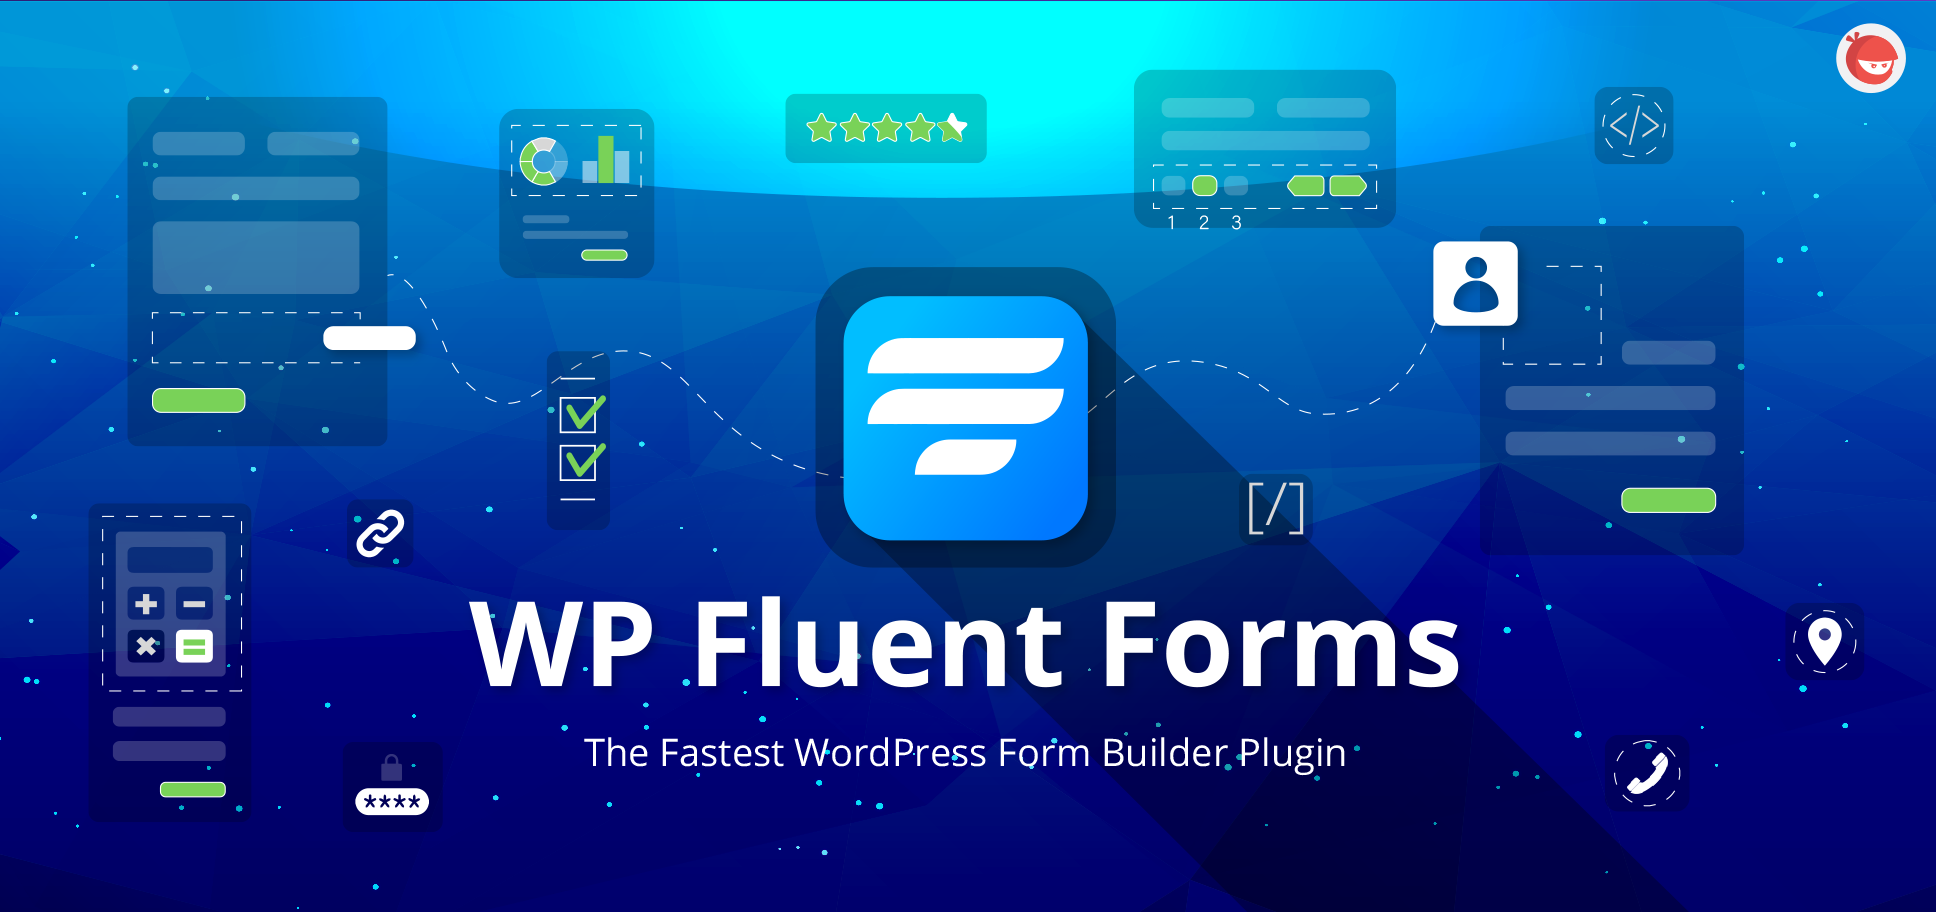 WP Fluent Forms Pro Add On v4.3.2